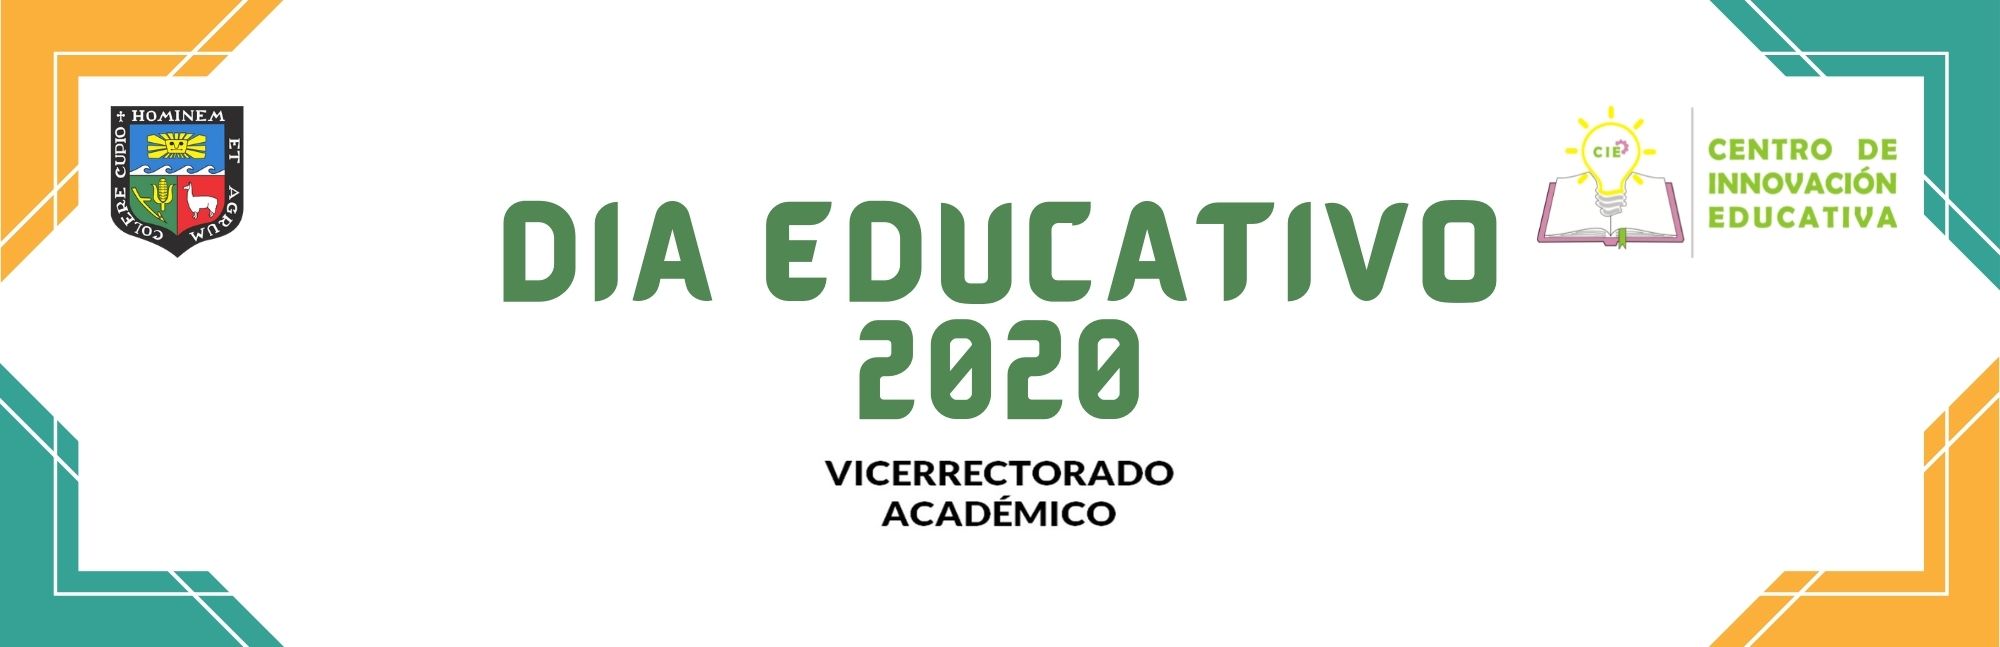 Portada Dia educativo 2020